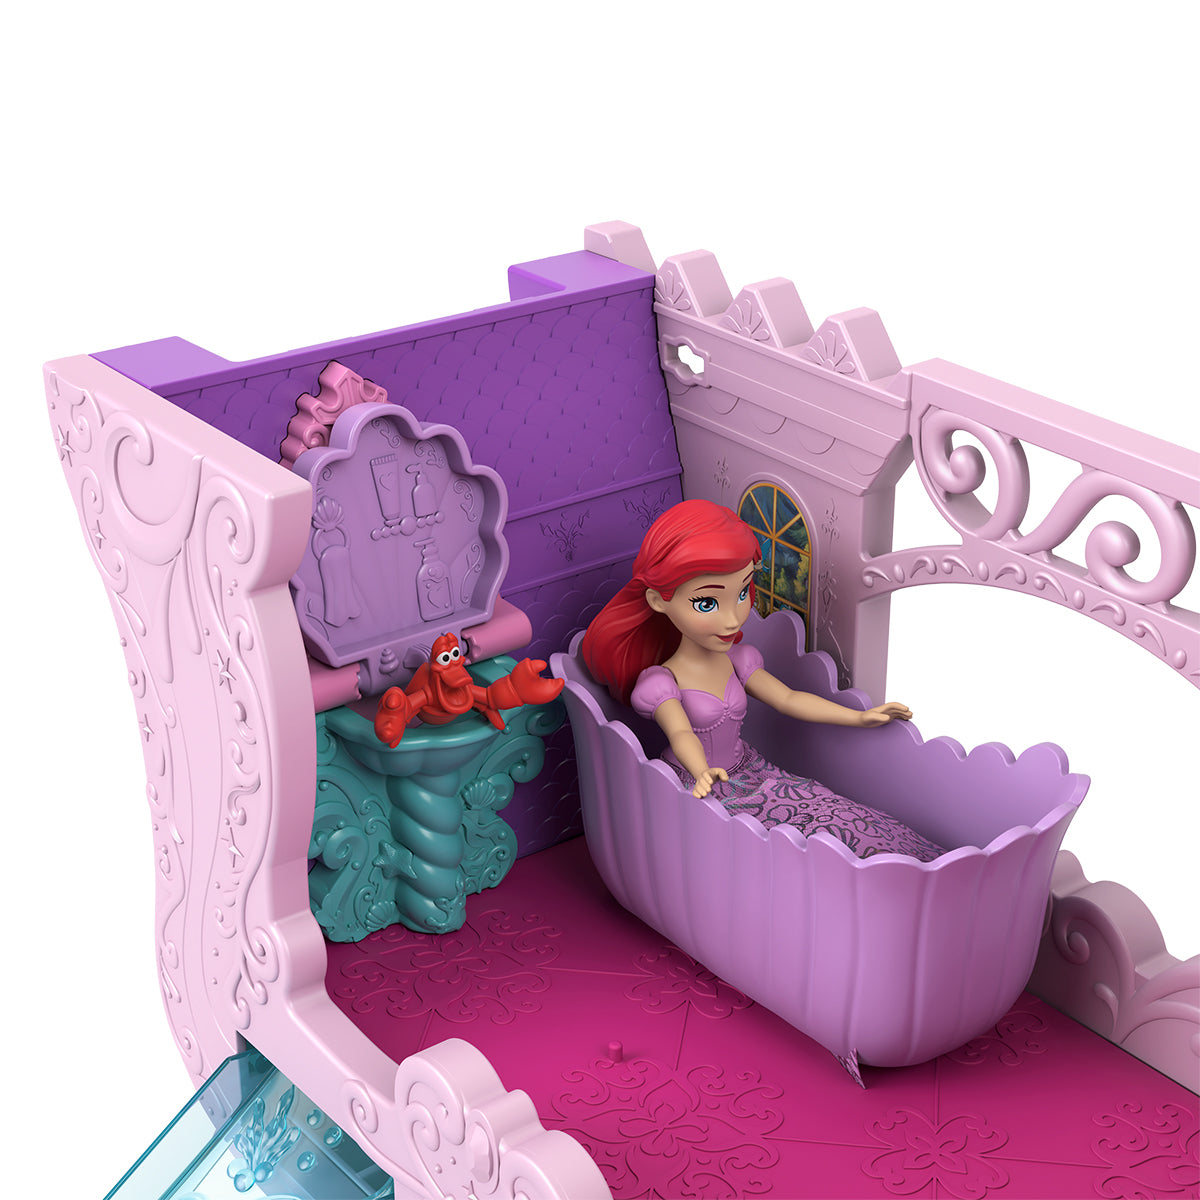 Disney Princess Carriage to Castle Playset